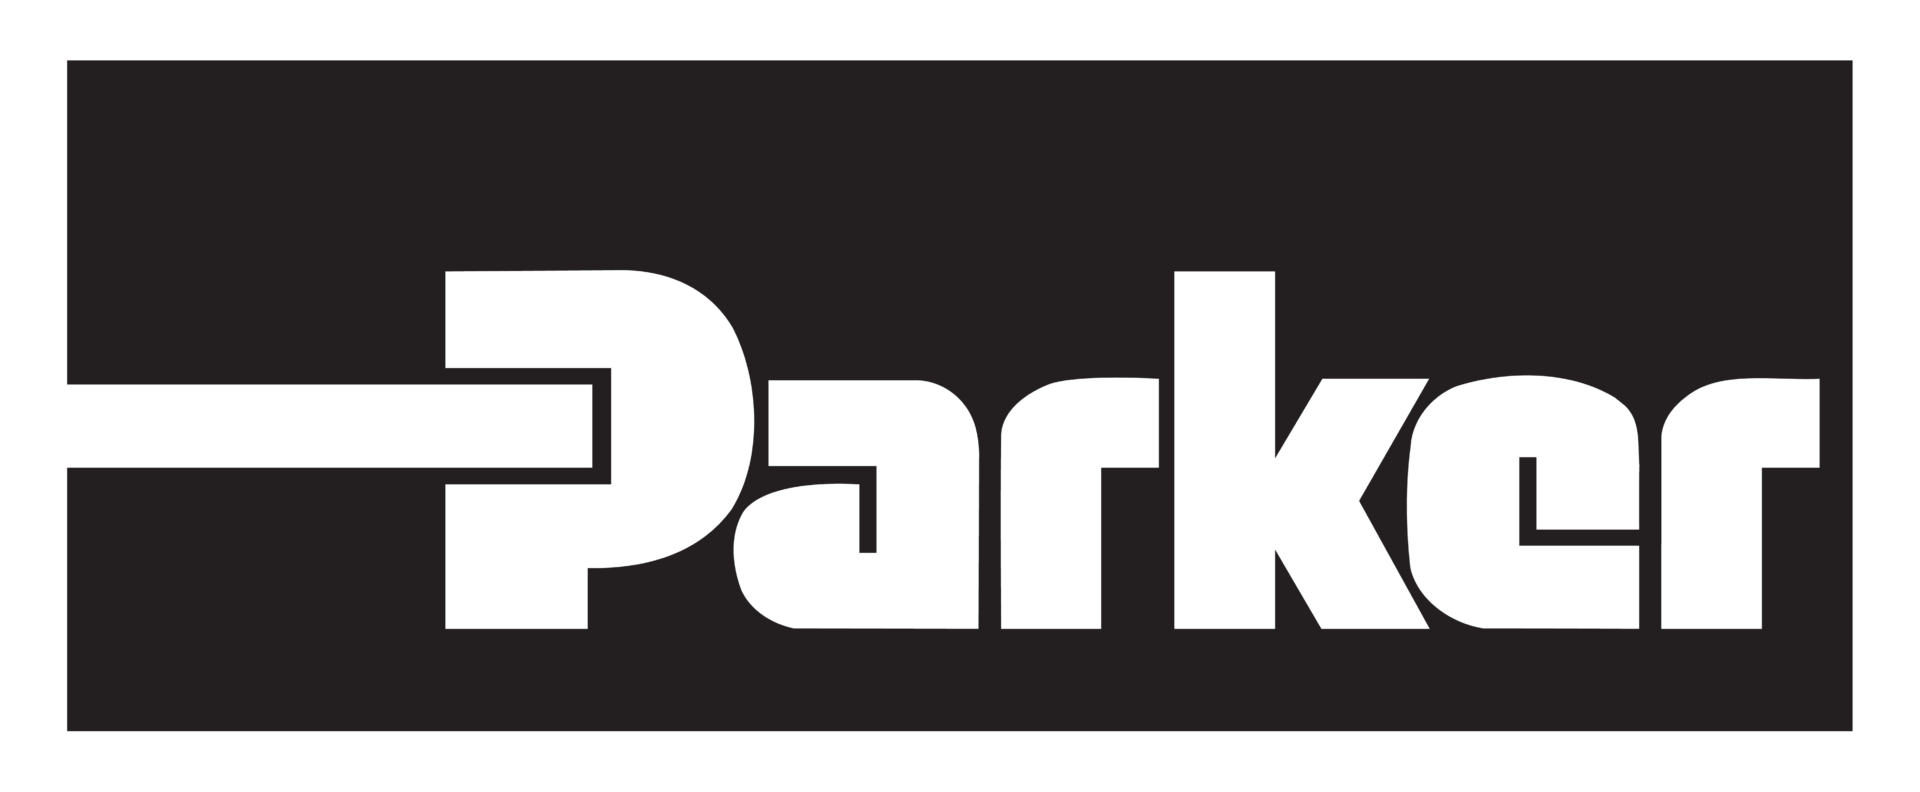 purepng.com parker hannifin logologobrand logoiconslogos 2515199387710dv6x - Component manufacturers